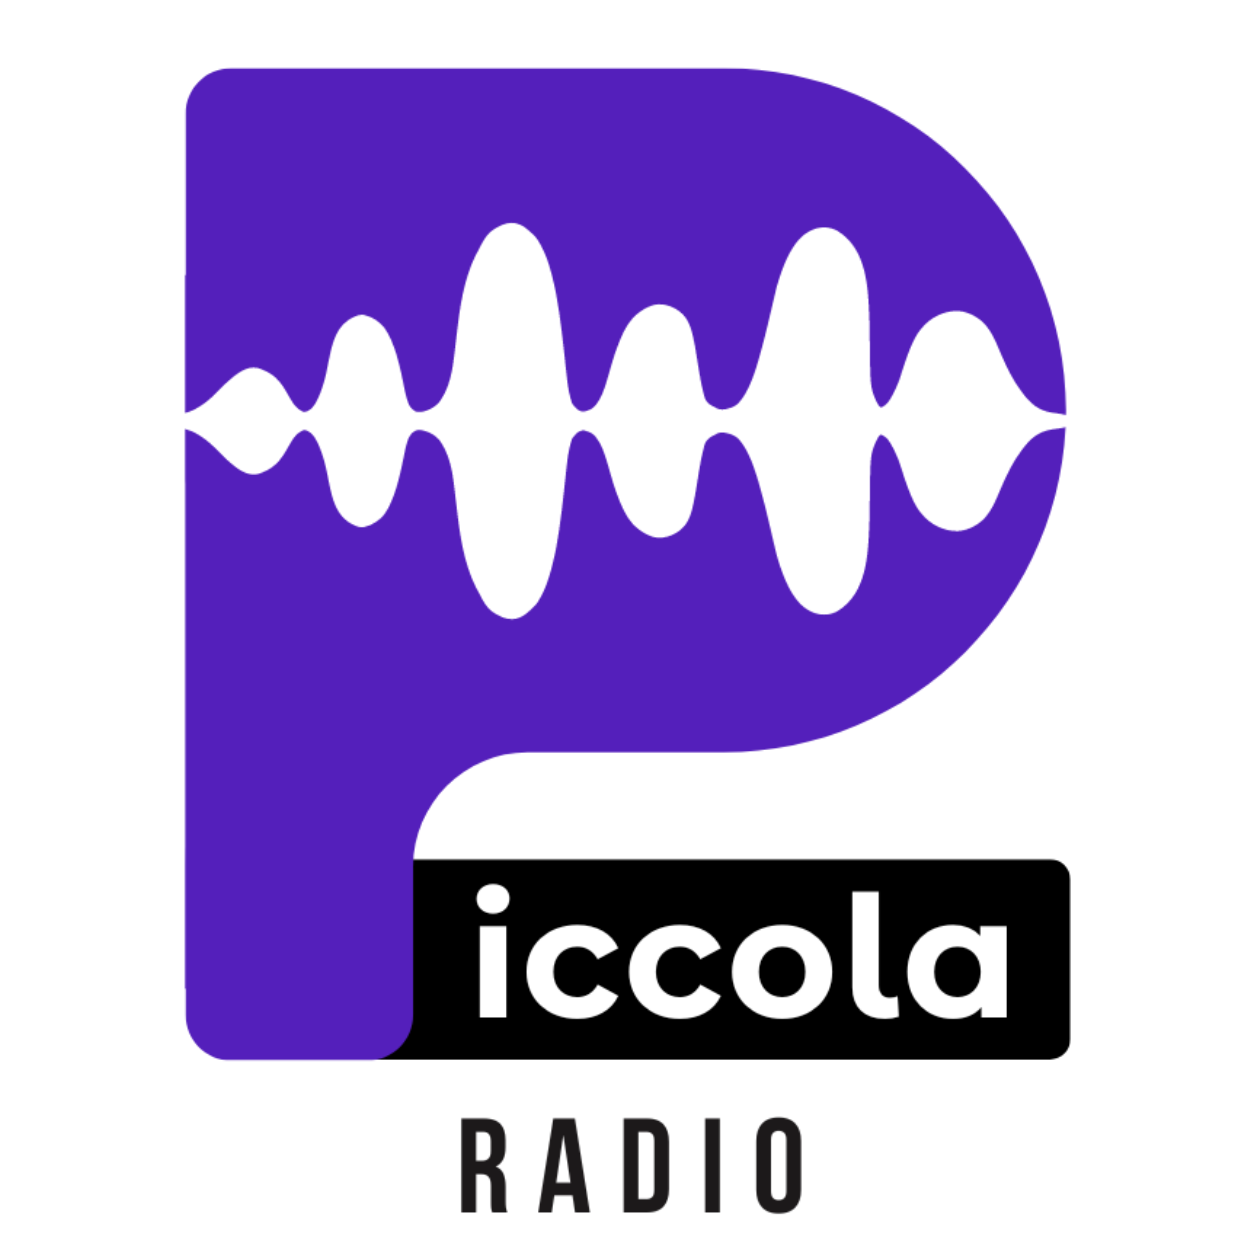 Piccola Radio Roma